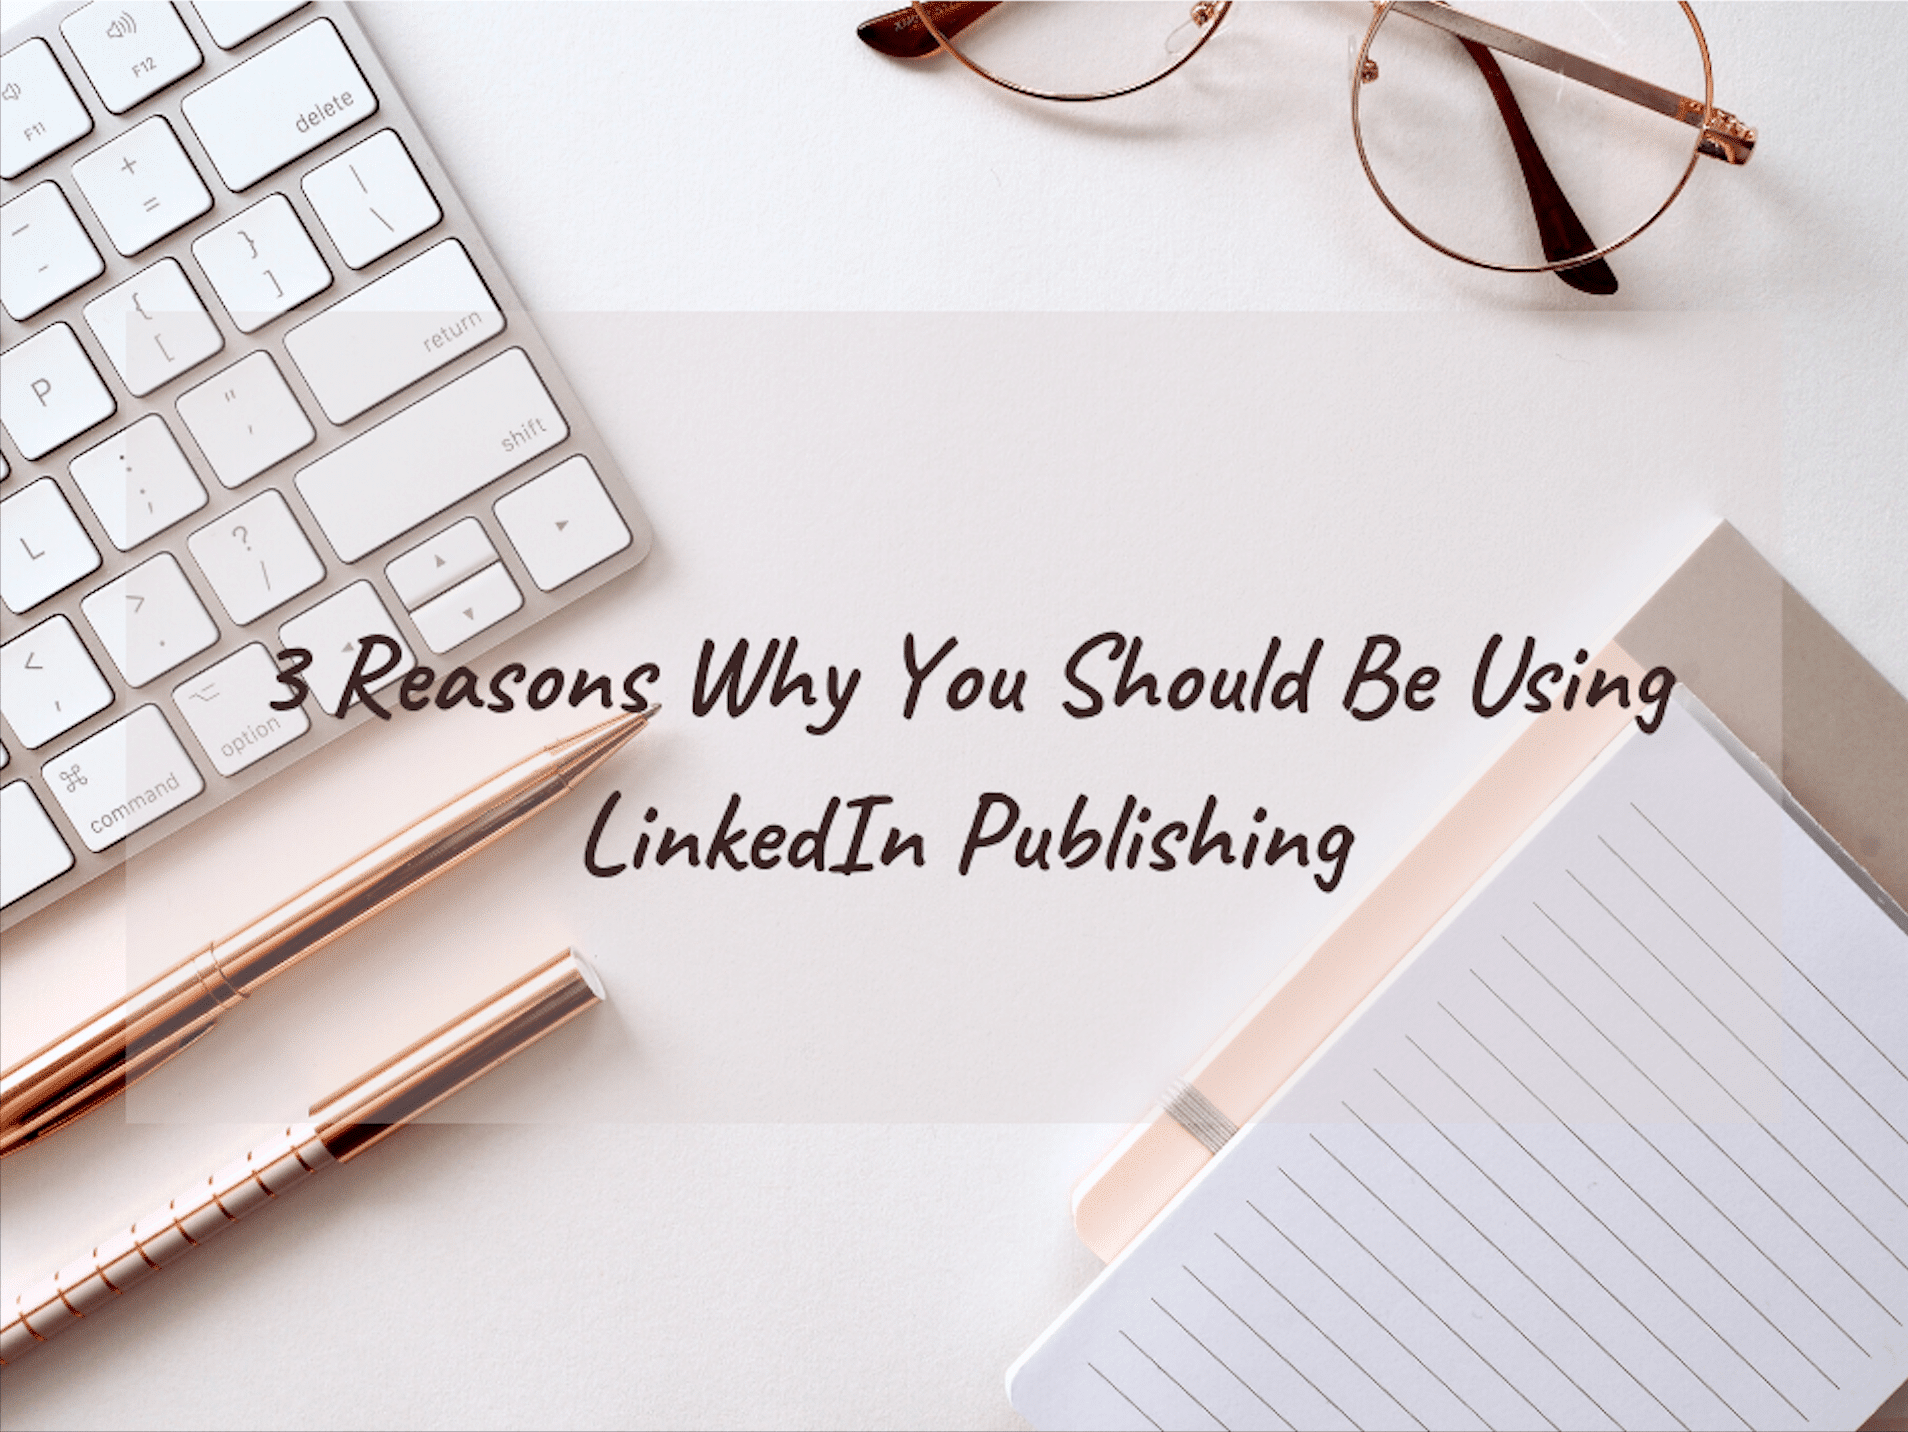 3 Reasons Why You Should Be Using LinkedIn Publishing